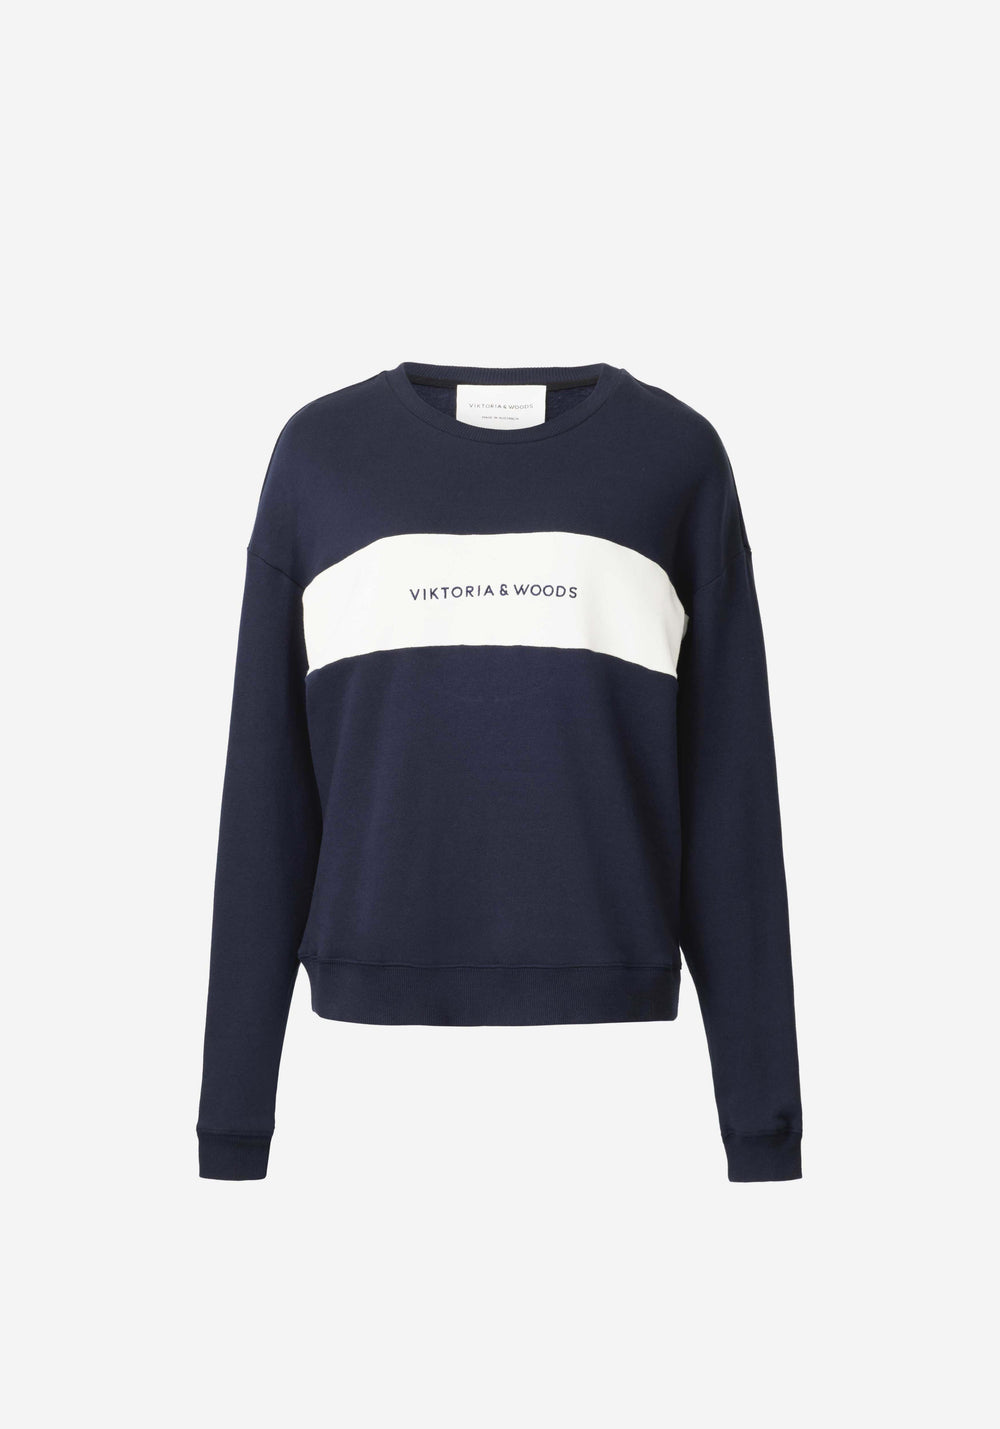 Viktoria & Woods V&W Block Sweater - Navy/Ivory